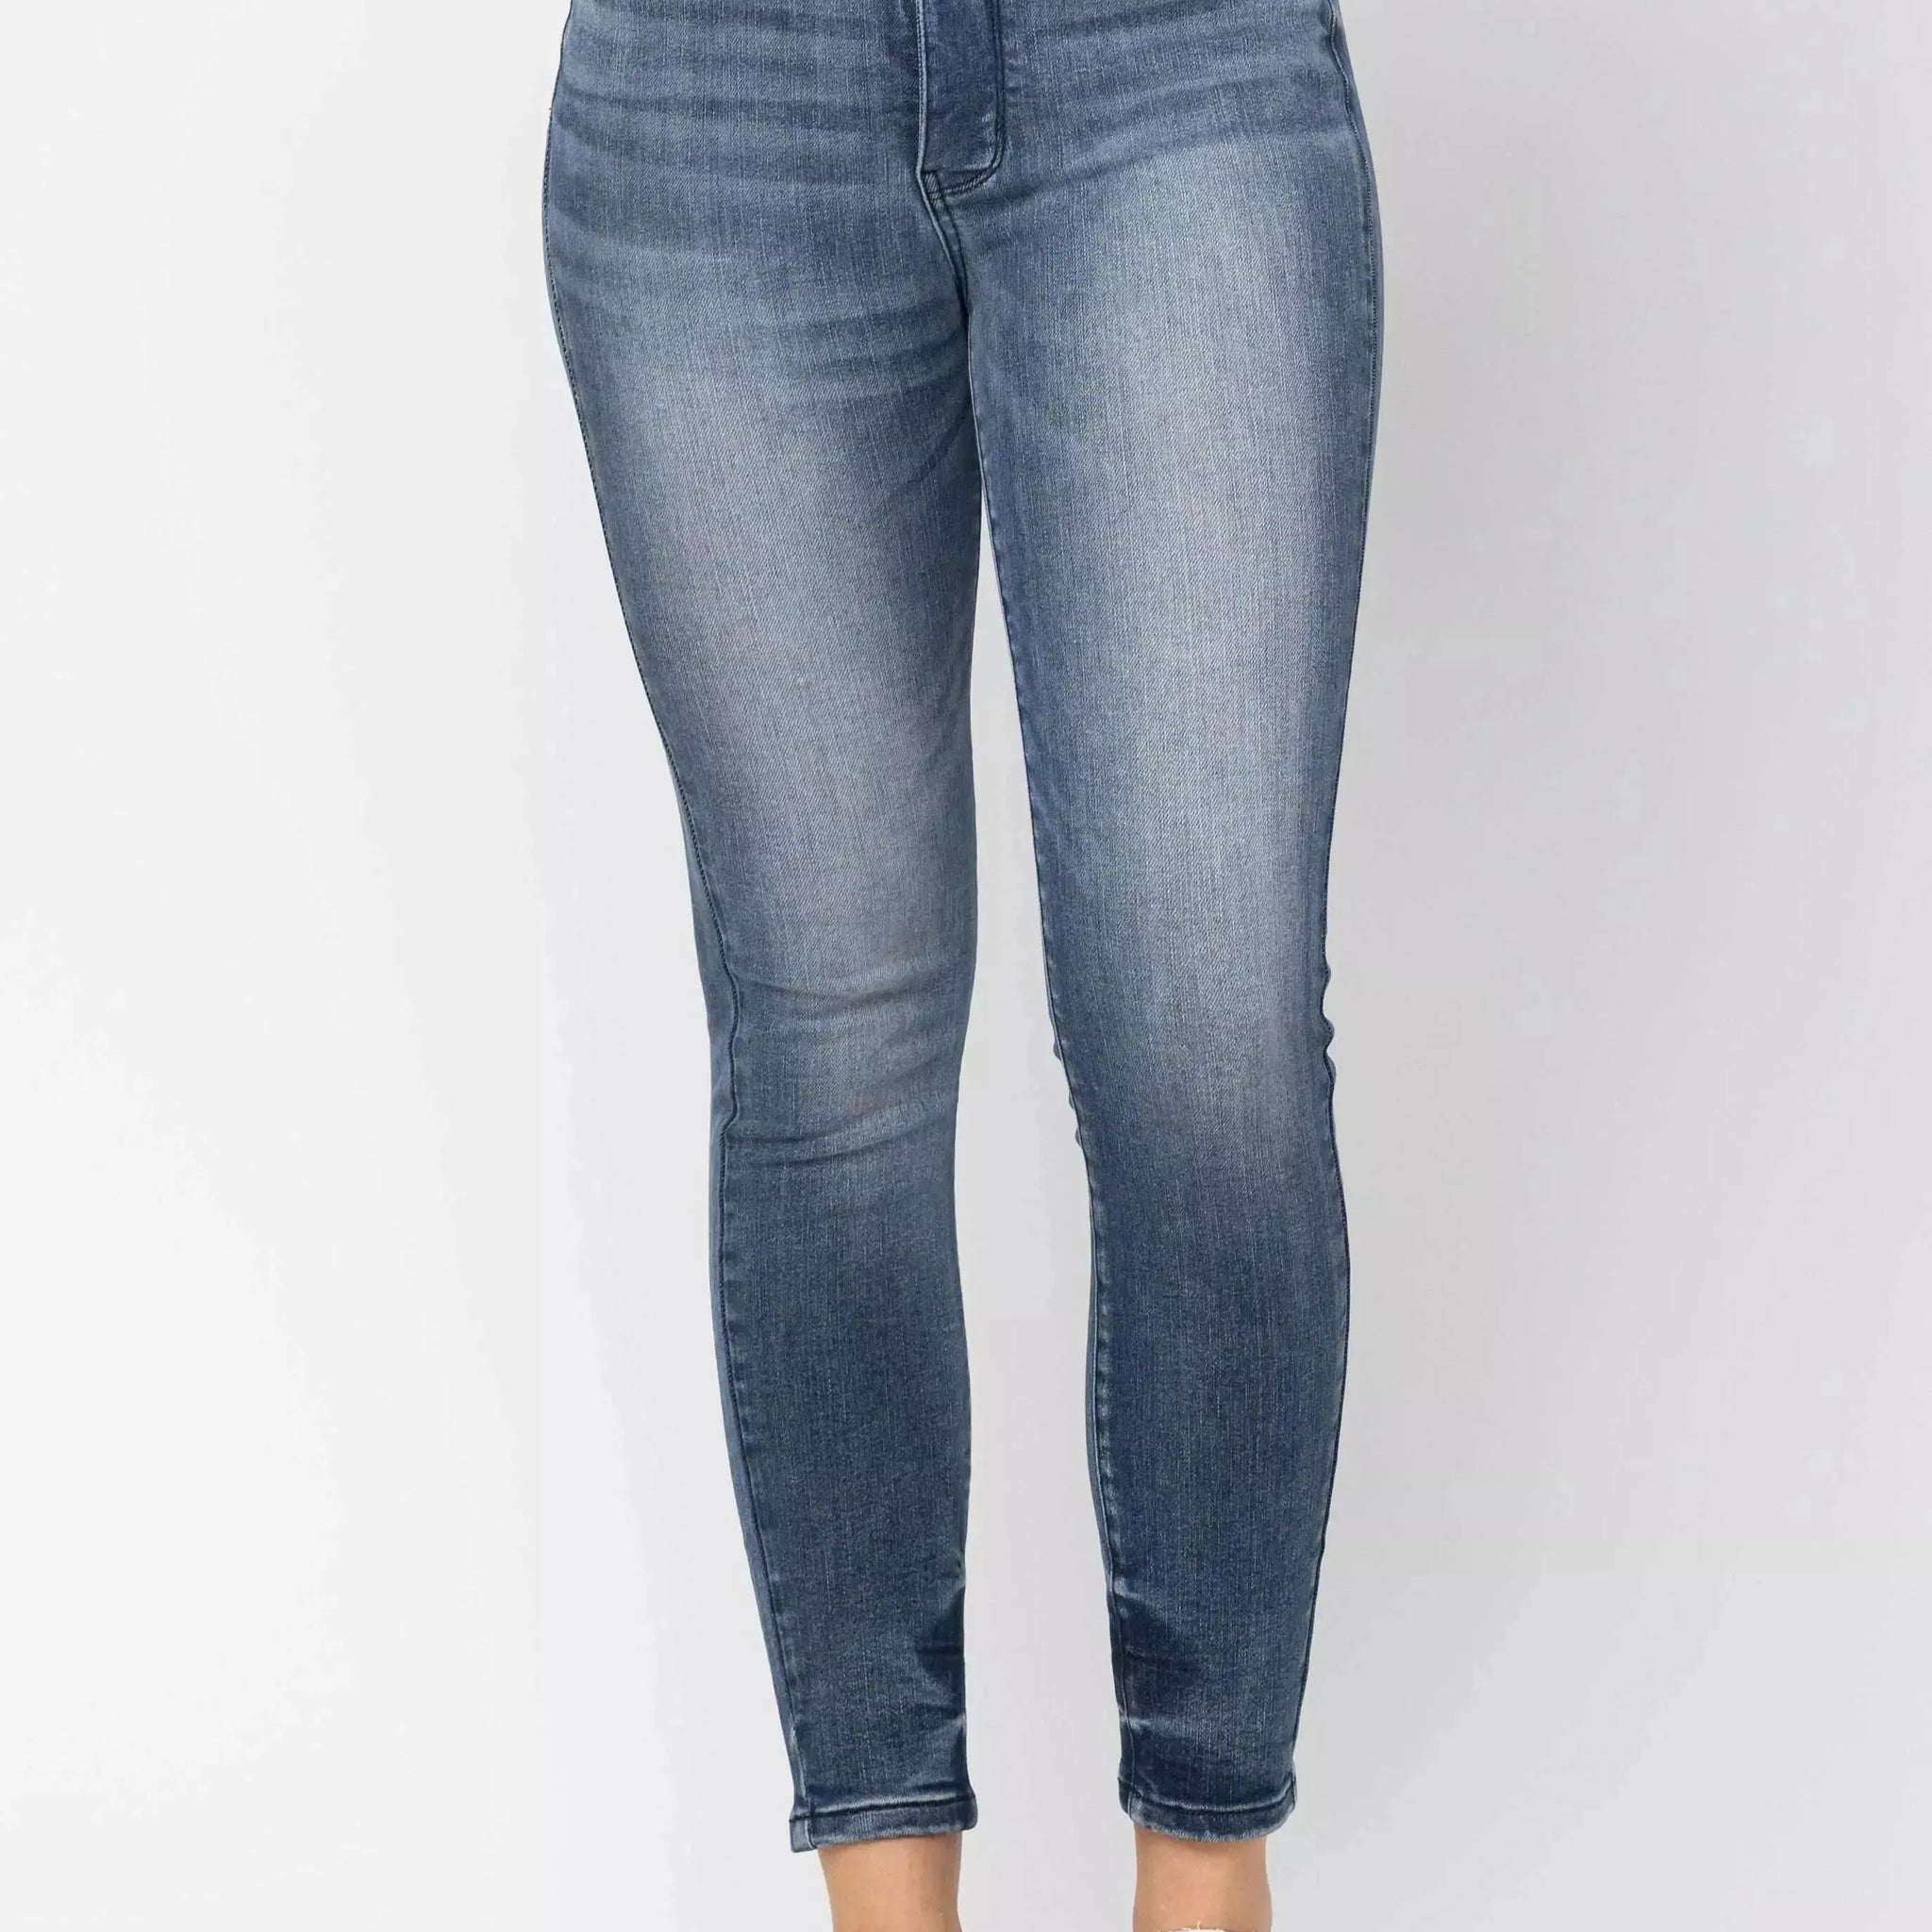 Judy Blue Tummy Control Contrast Wash Skinny Jeans Reg/Plus